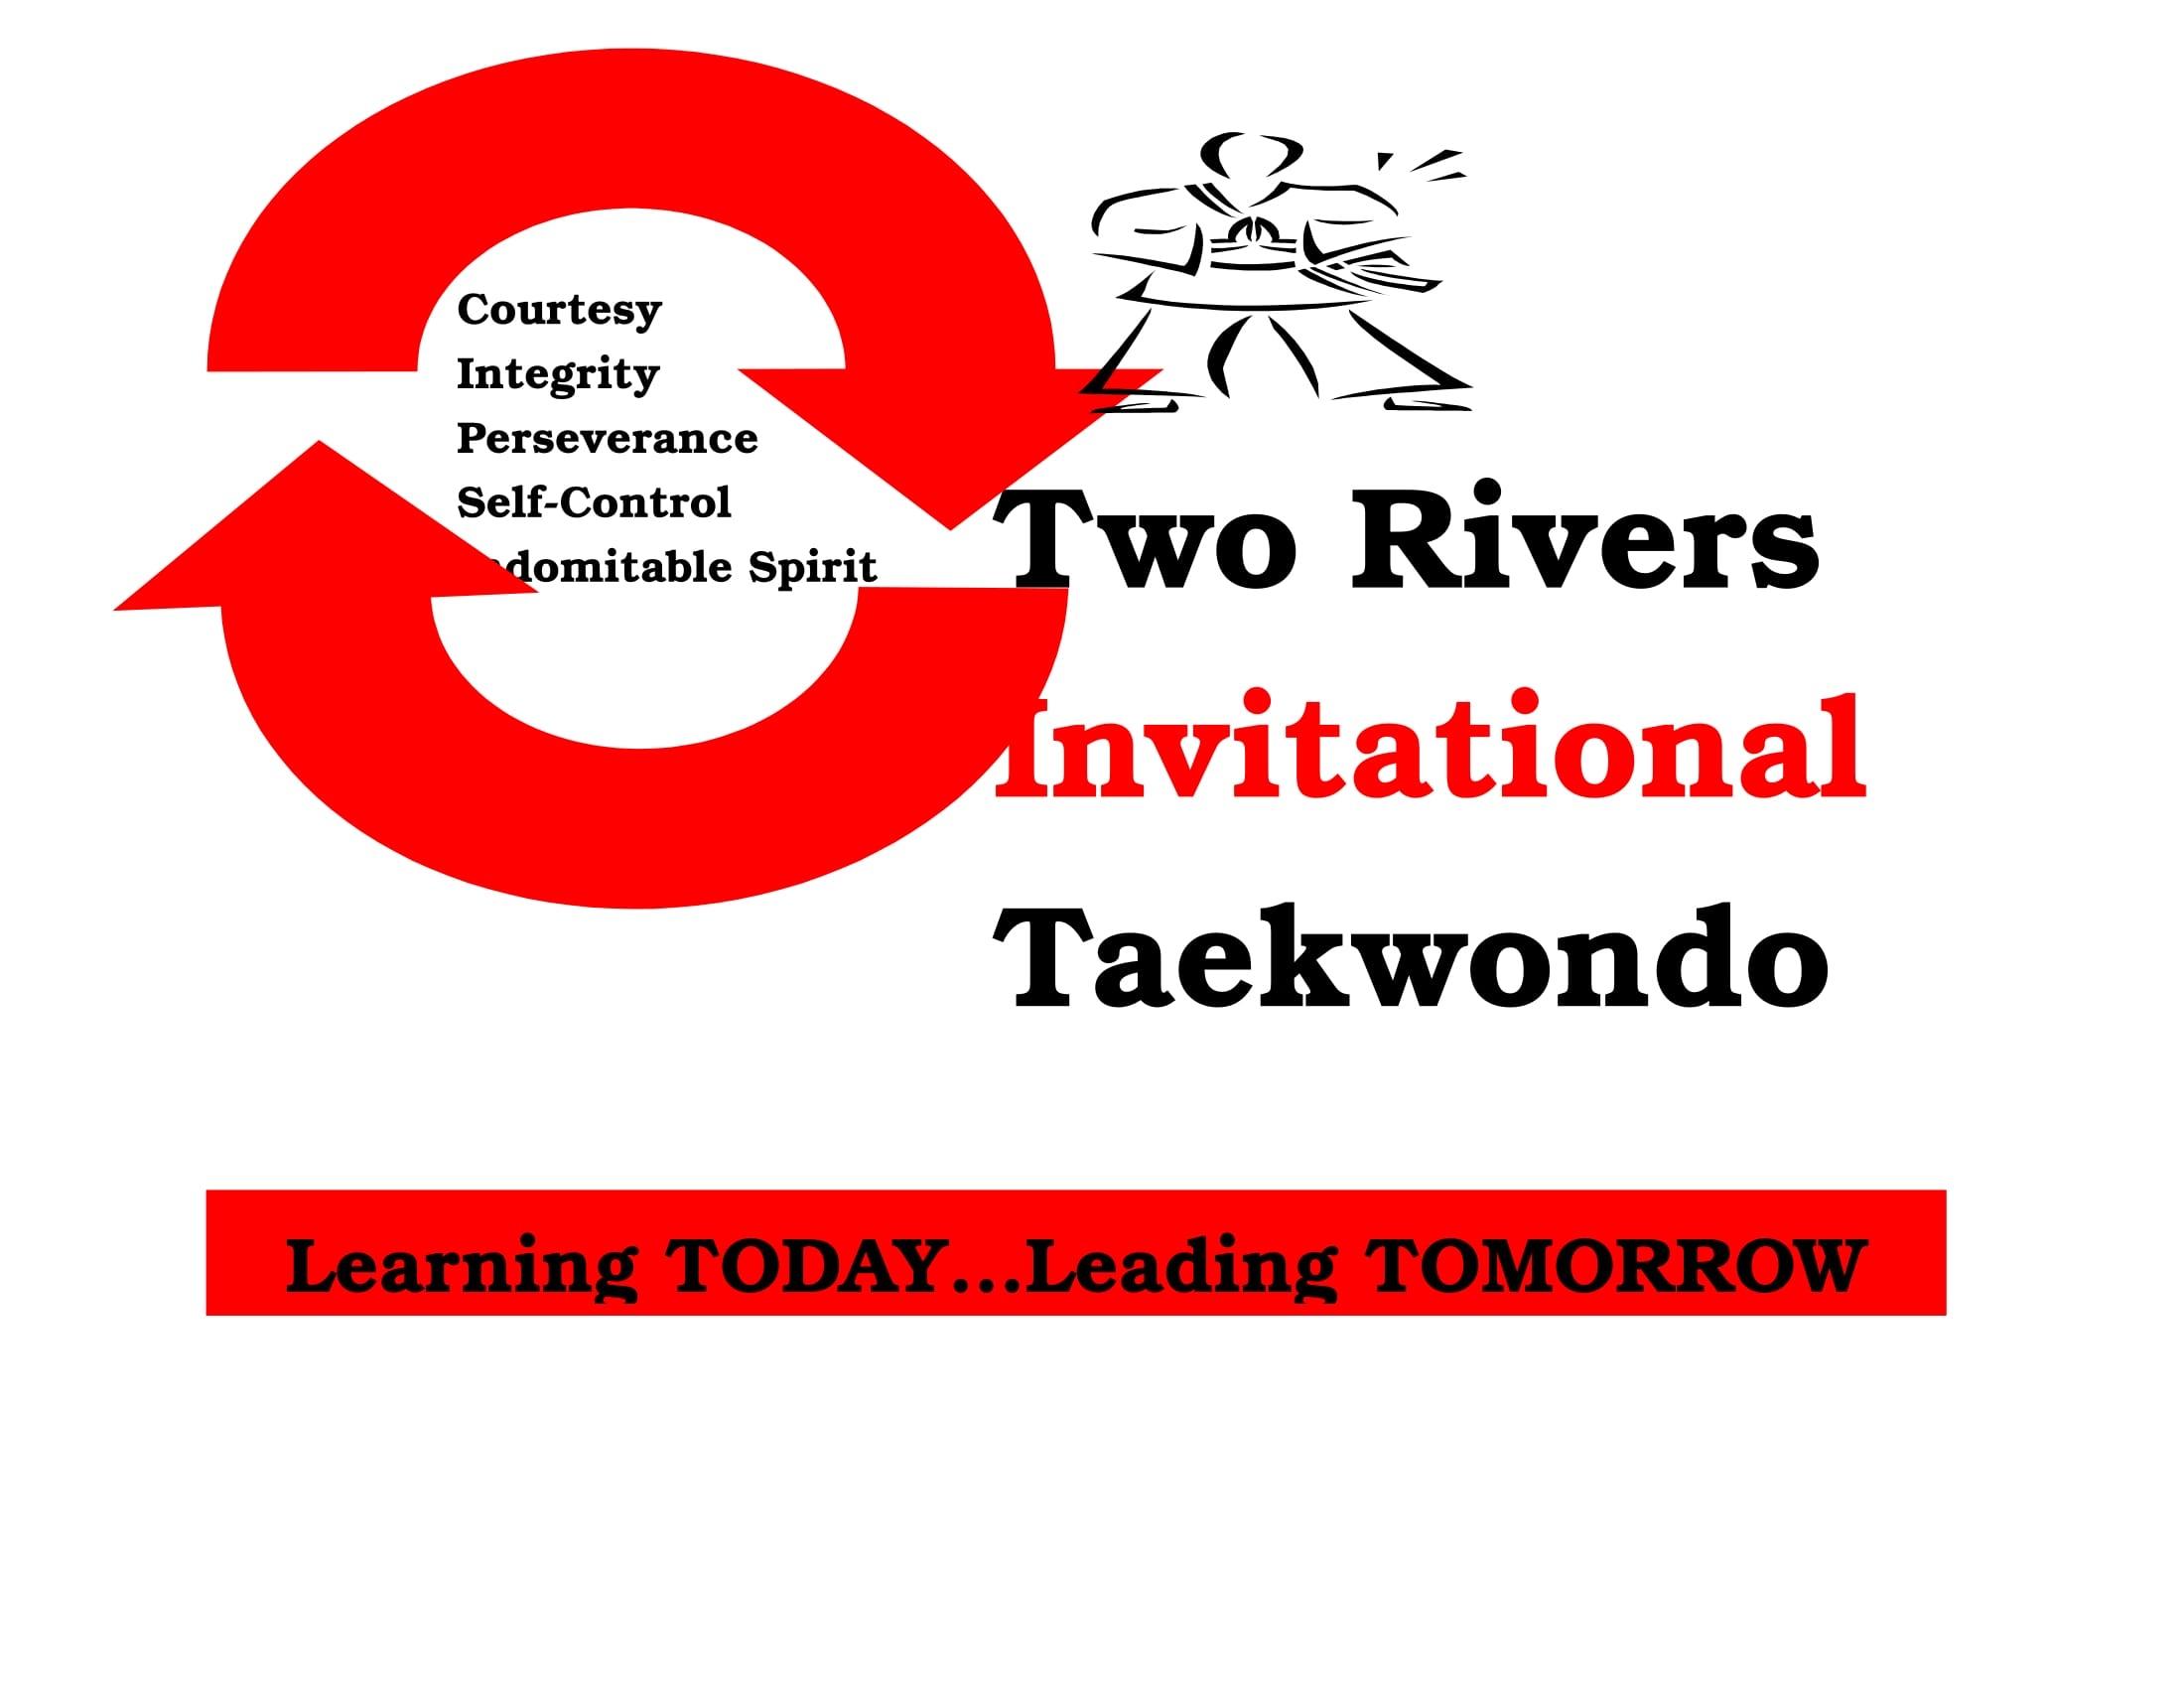 25th Annual Two Rivers Invitational Taekwondo Tournament